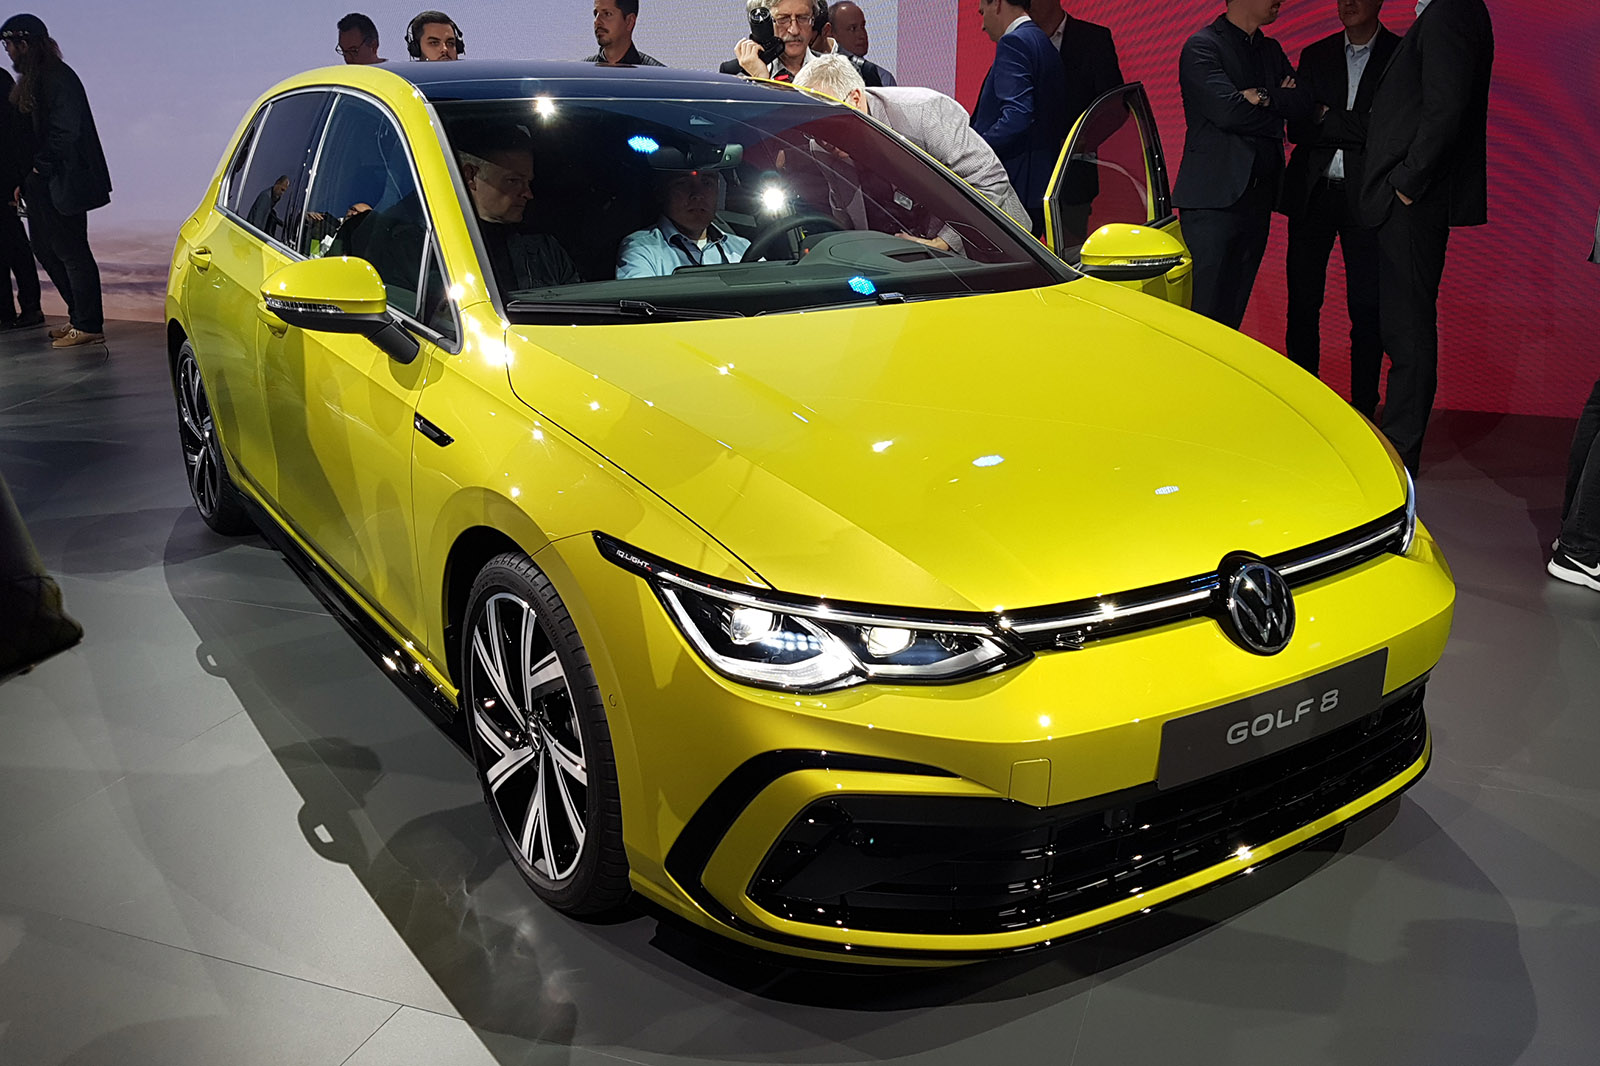 Verknald Opblazen boeren New 2020 Volkswagen Golf: first prices and specs announced | Autocar